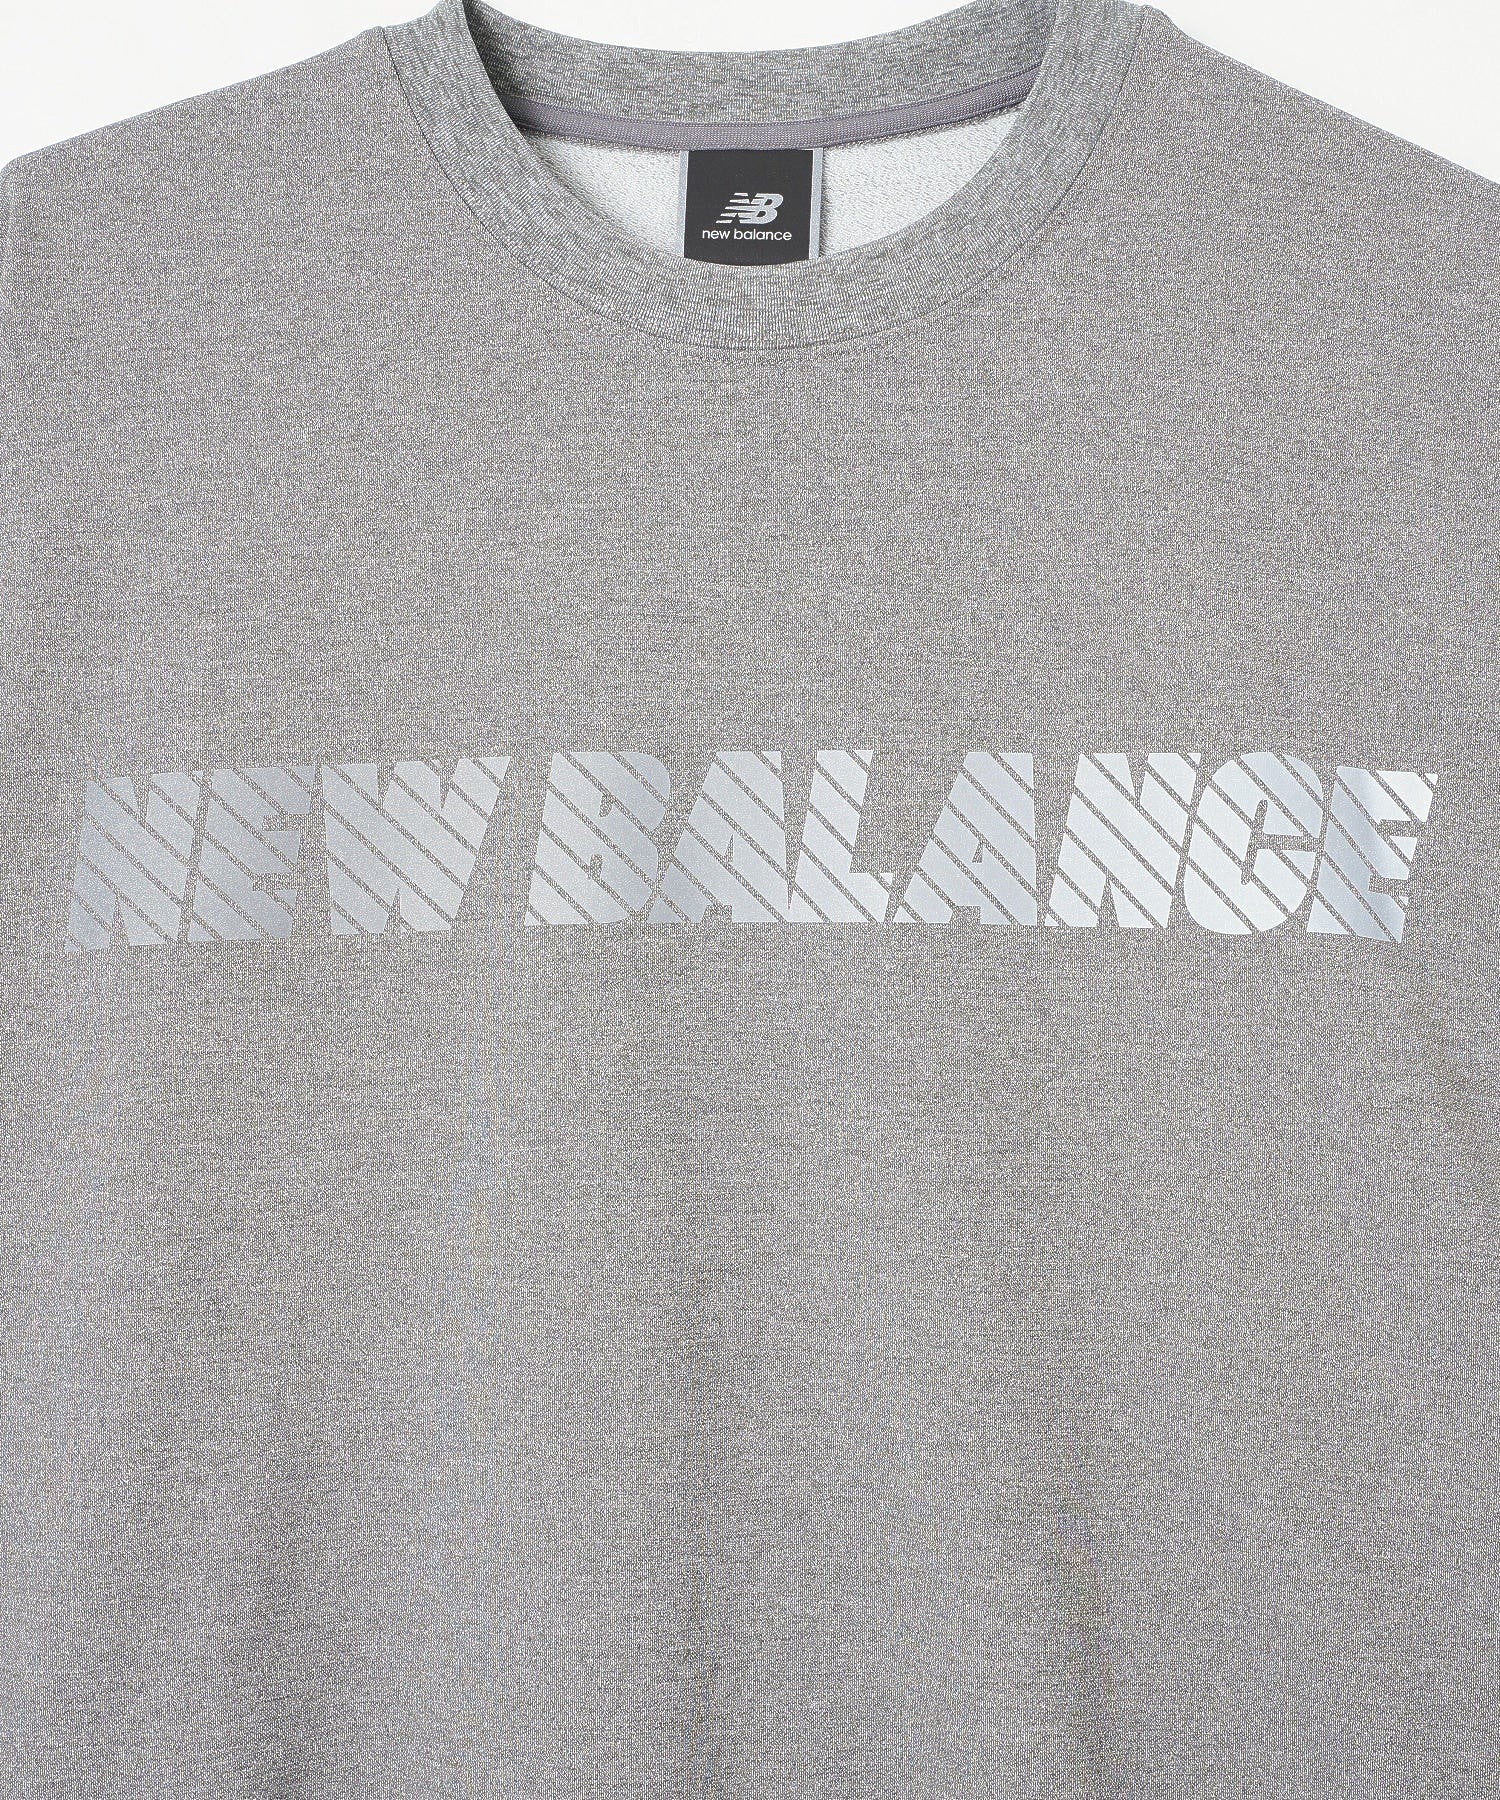 New Balance/ニューバランス/MET24 Crew Neck Sweatshirt/AMT35092